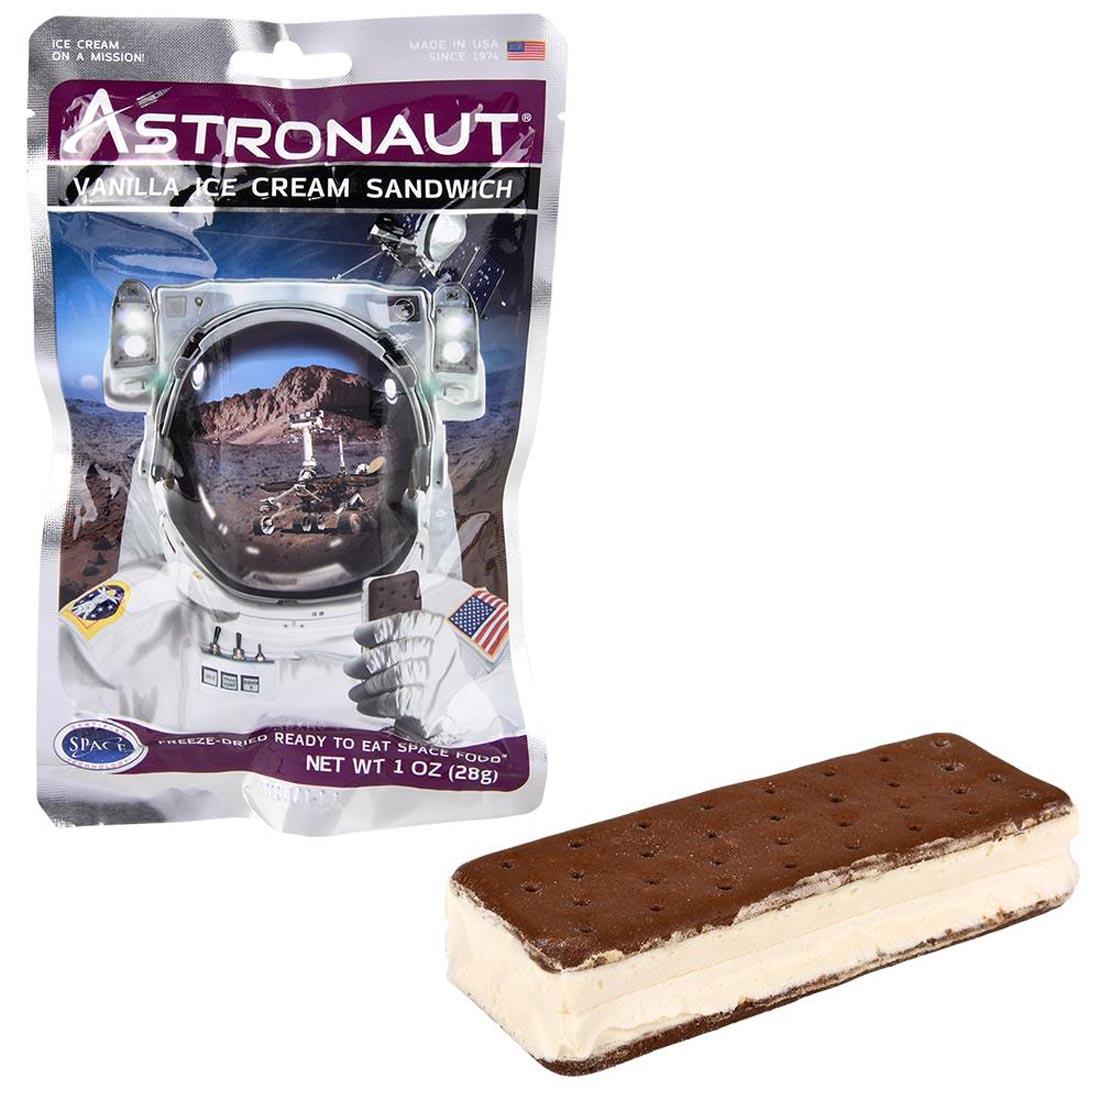 Astronaut Vanilla Ice Cream Sandwich next to an unopened package